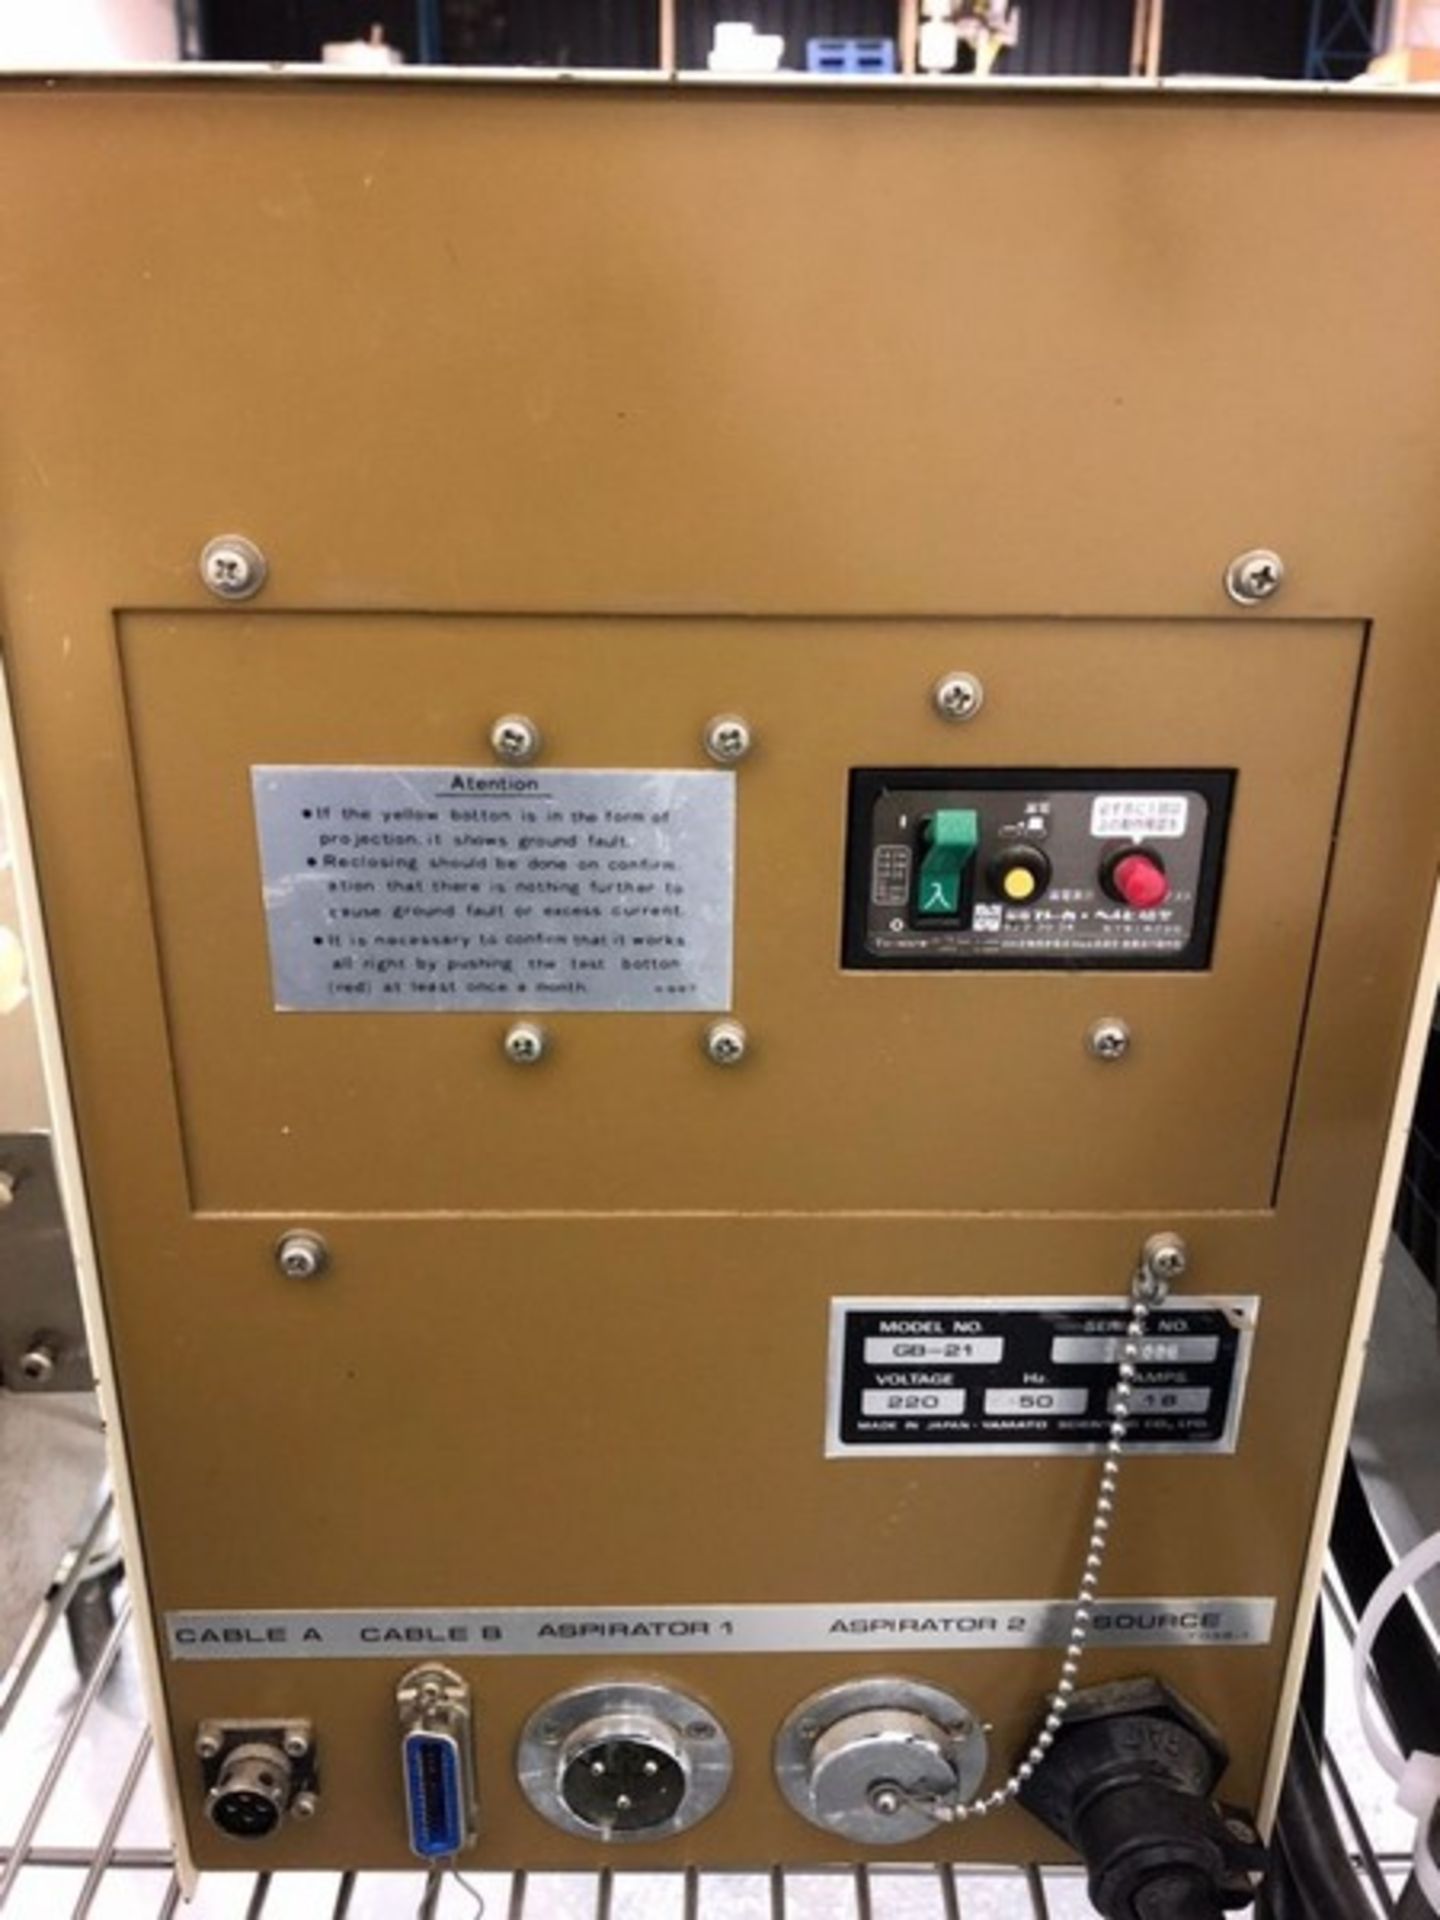 Yamato Pulvis GB-21 Pilot Scale Fluid Bed Dryer/Granulator. 220 Volt, 50 Hz, 18 Amps. Machine - Image 5 of 5